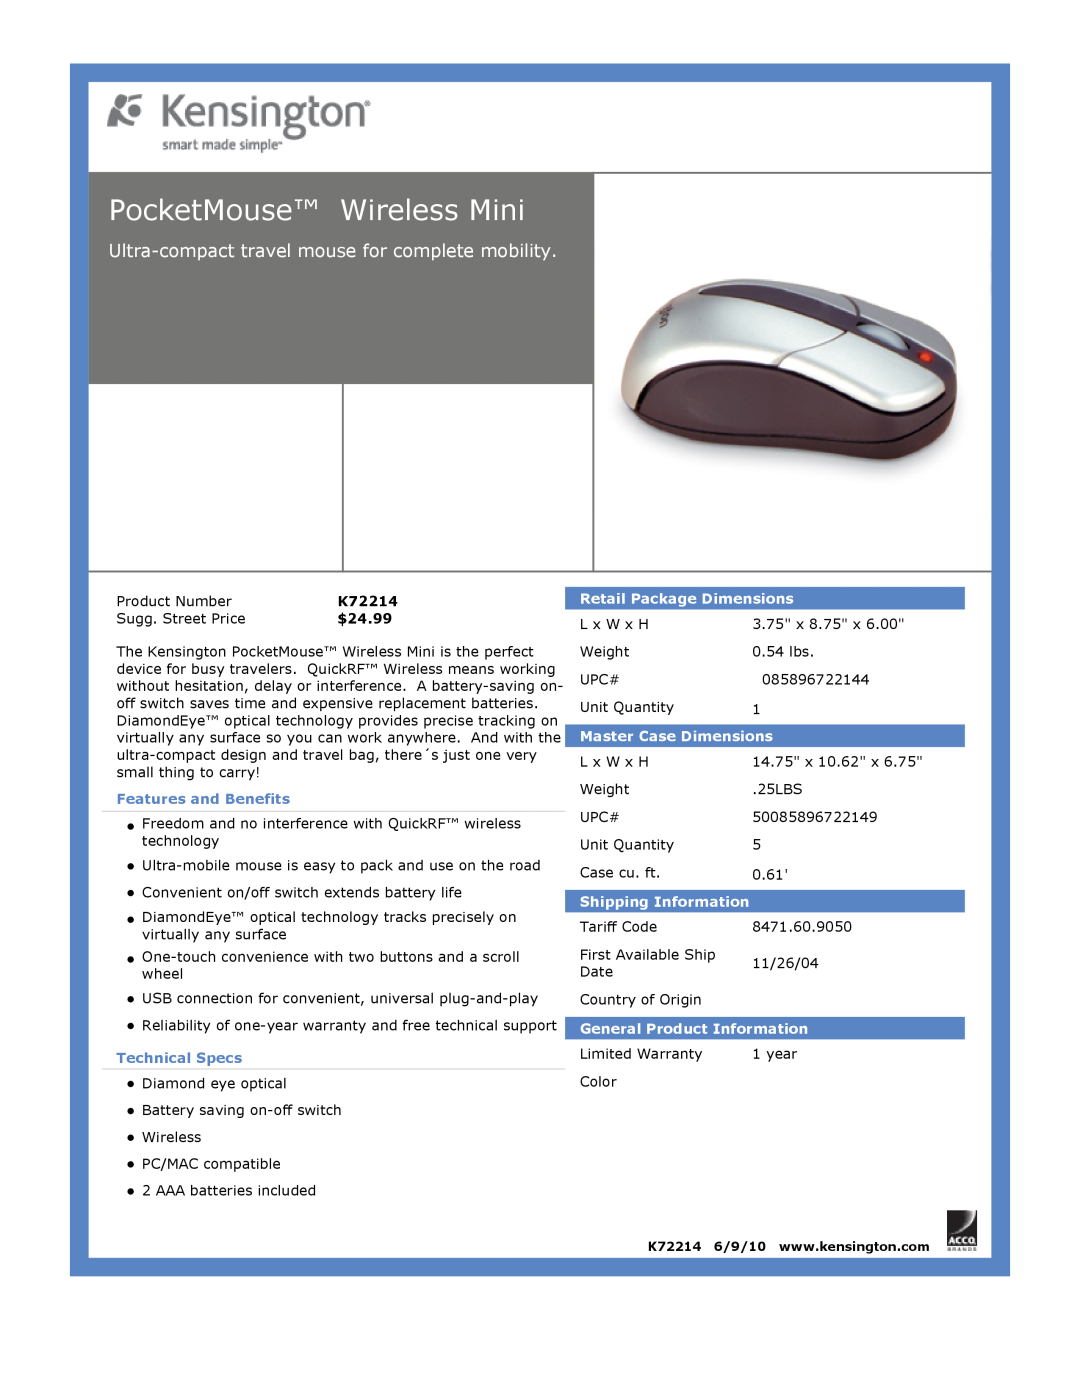 Kensington EU64325 PocketMouse Wireless Mini, Ultra-compacttravel mouse for complete mobility, $24.99, Technical Specs 